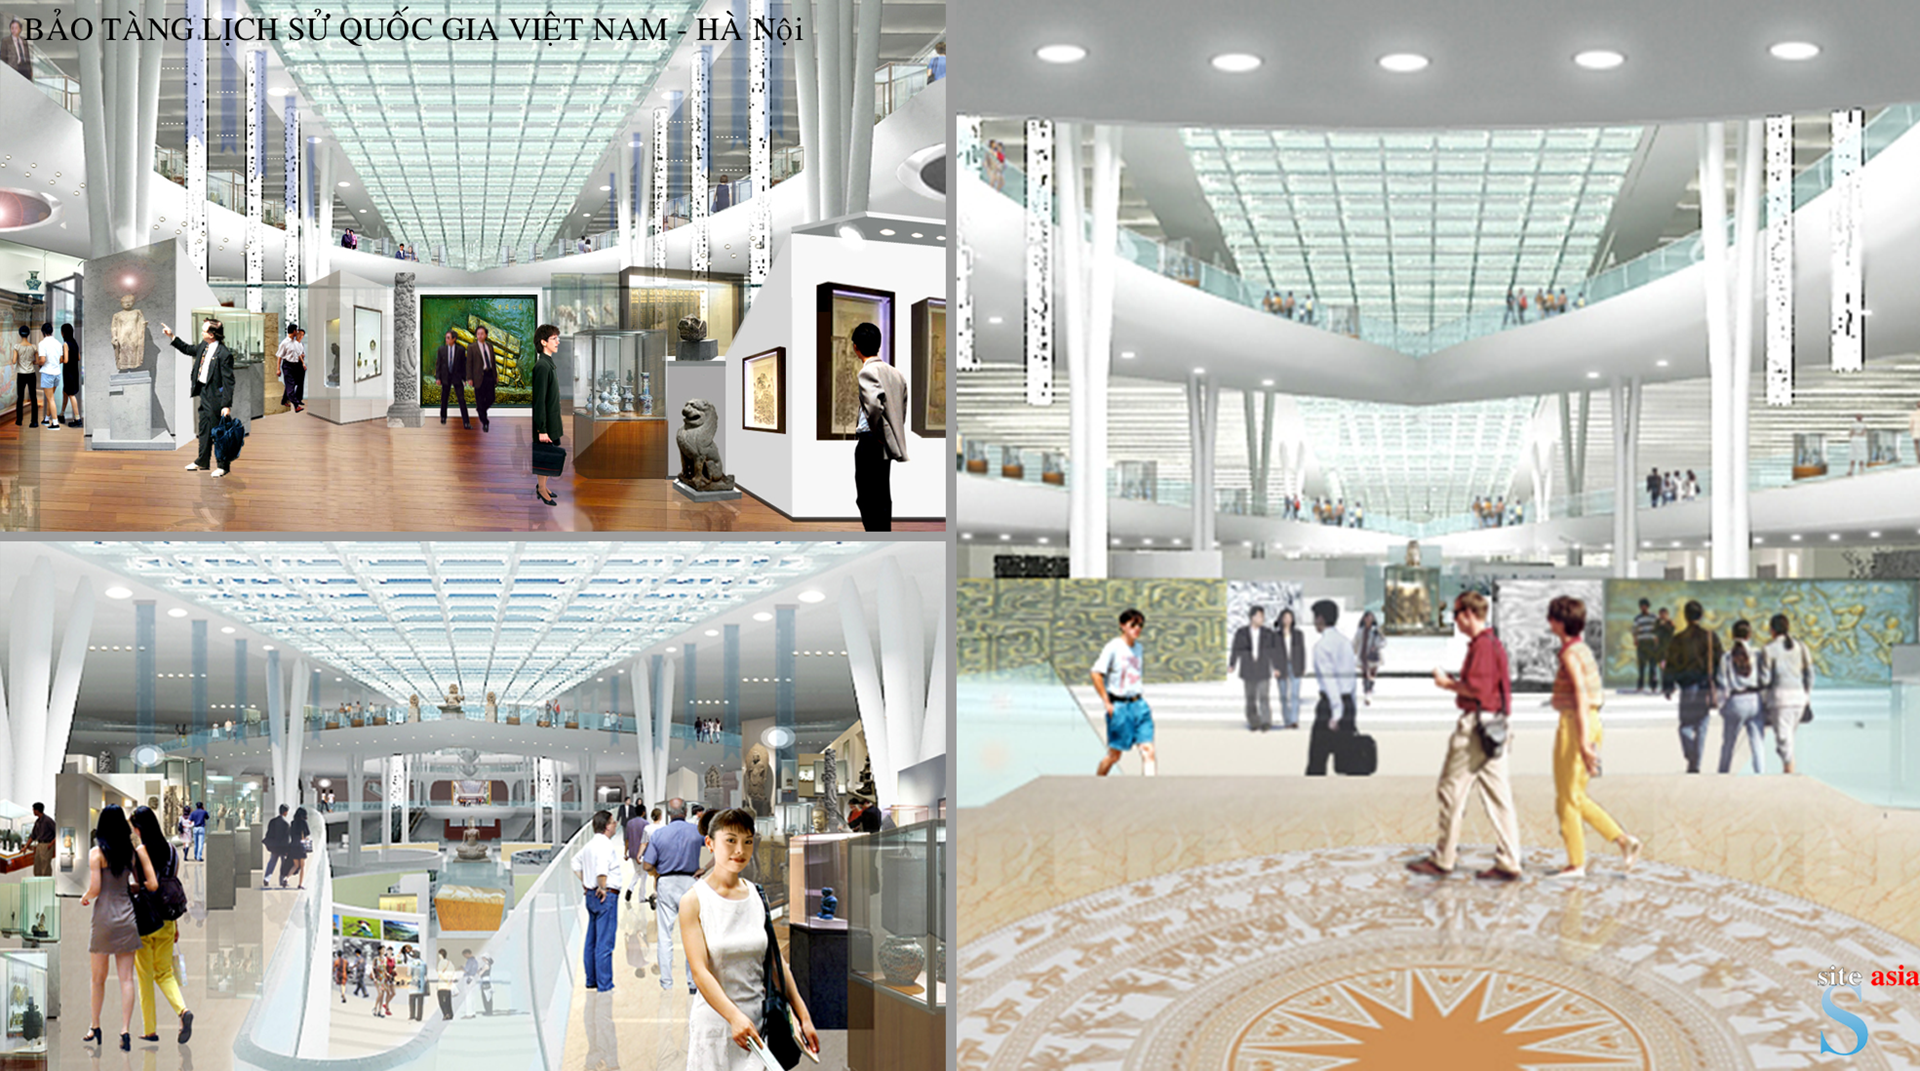 Vietnam National Museum of History  – Ha Noi  Museography & Interior Design